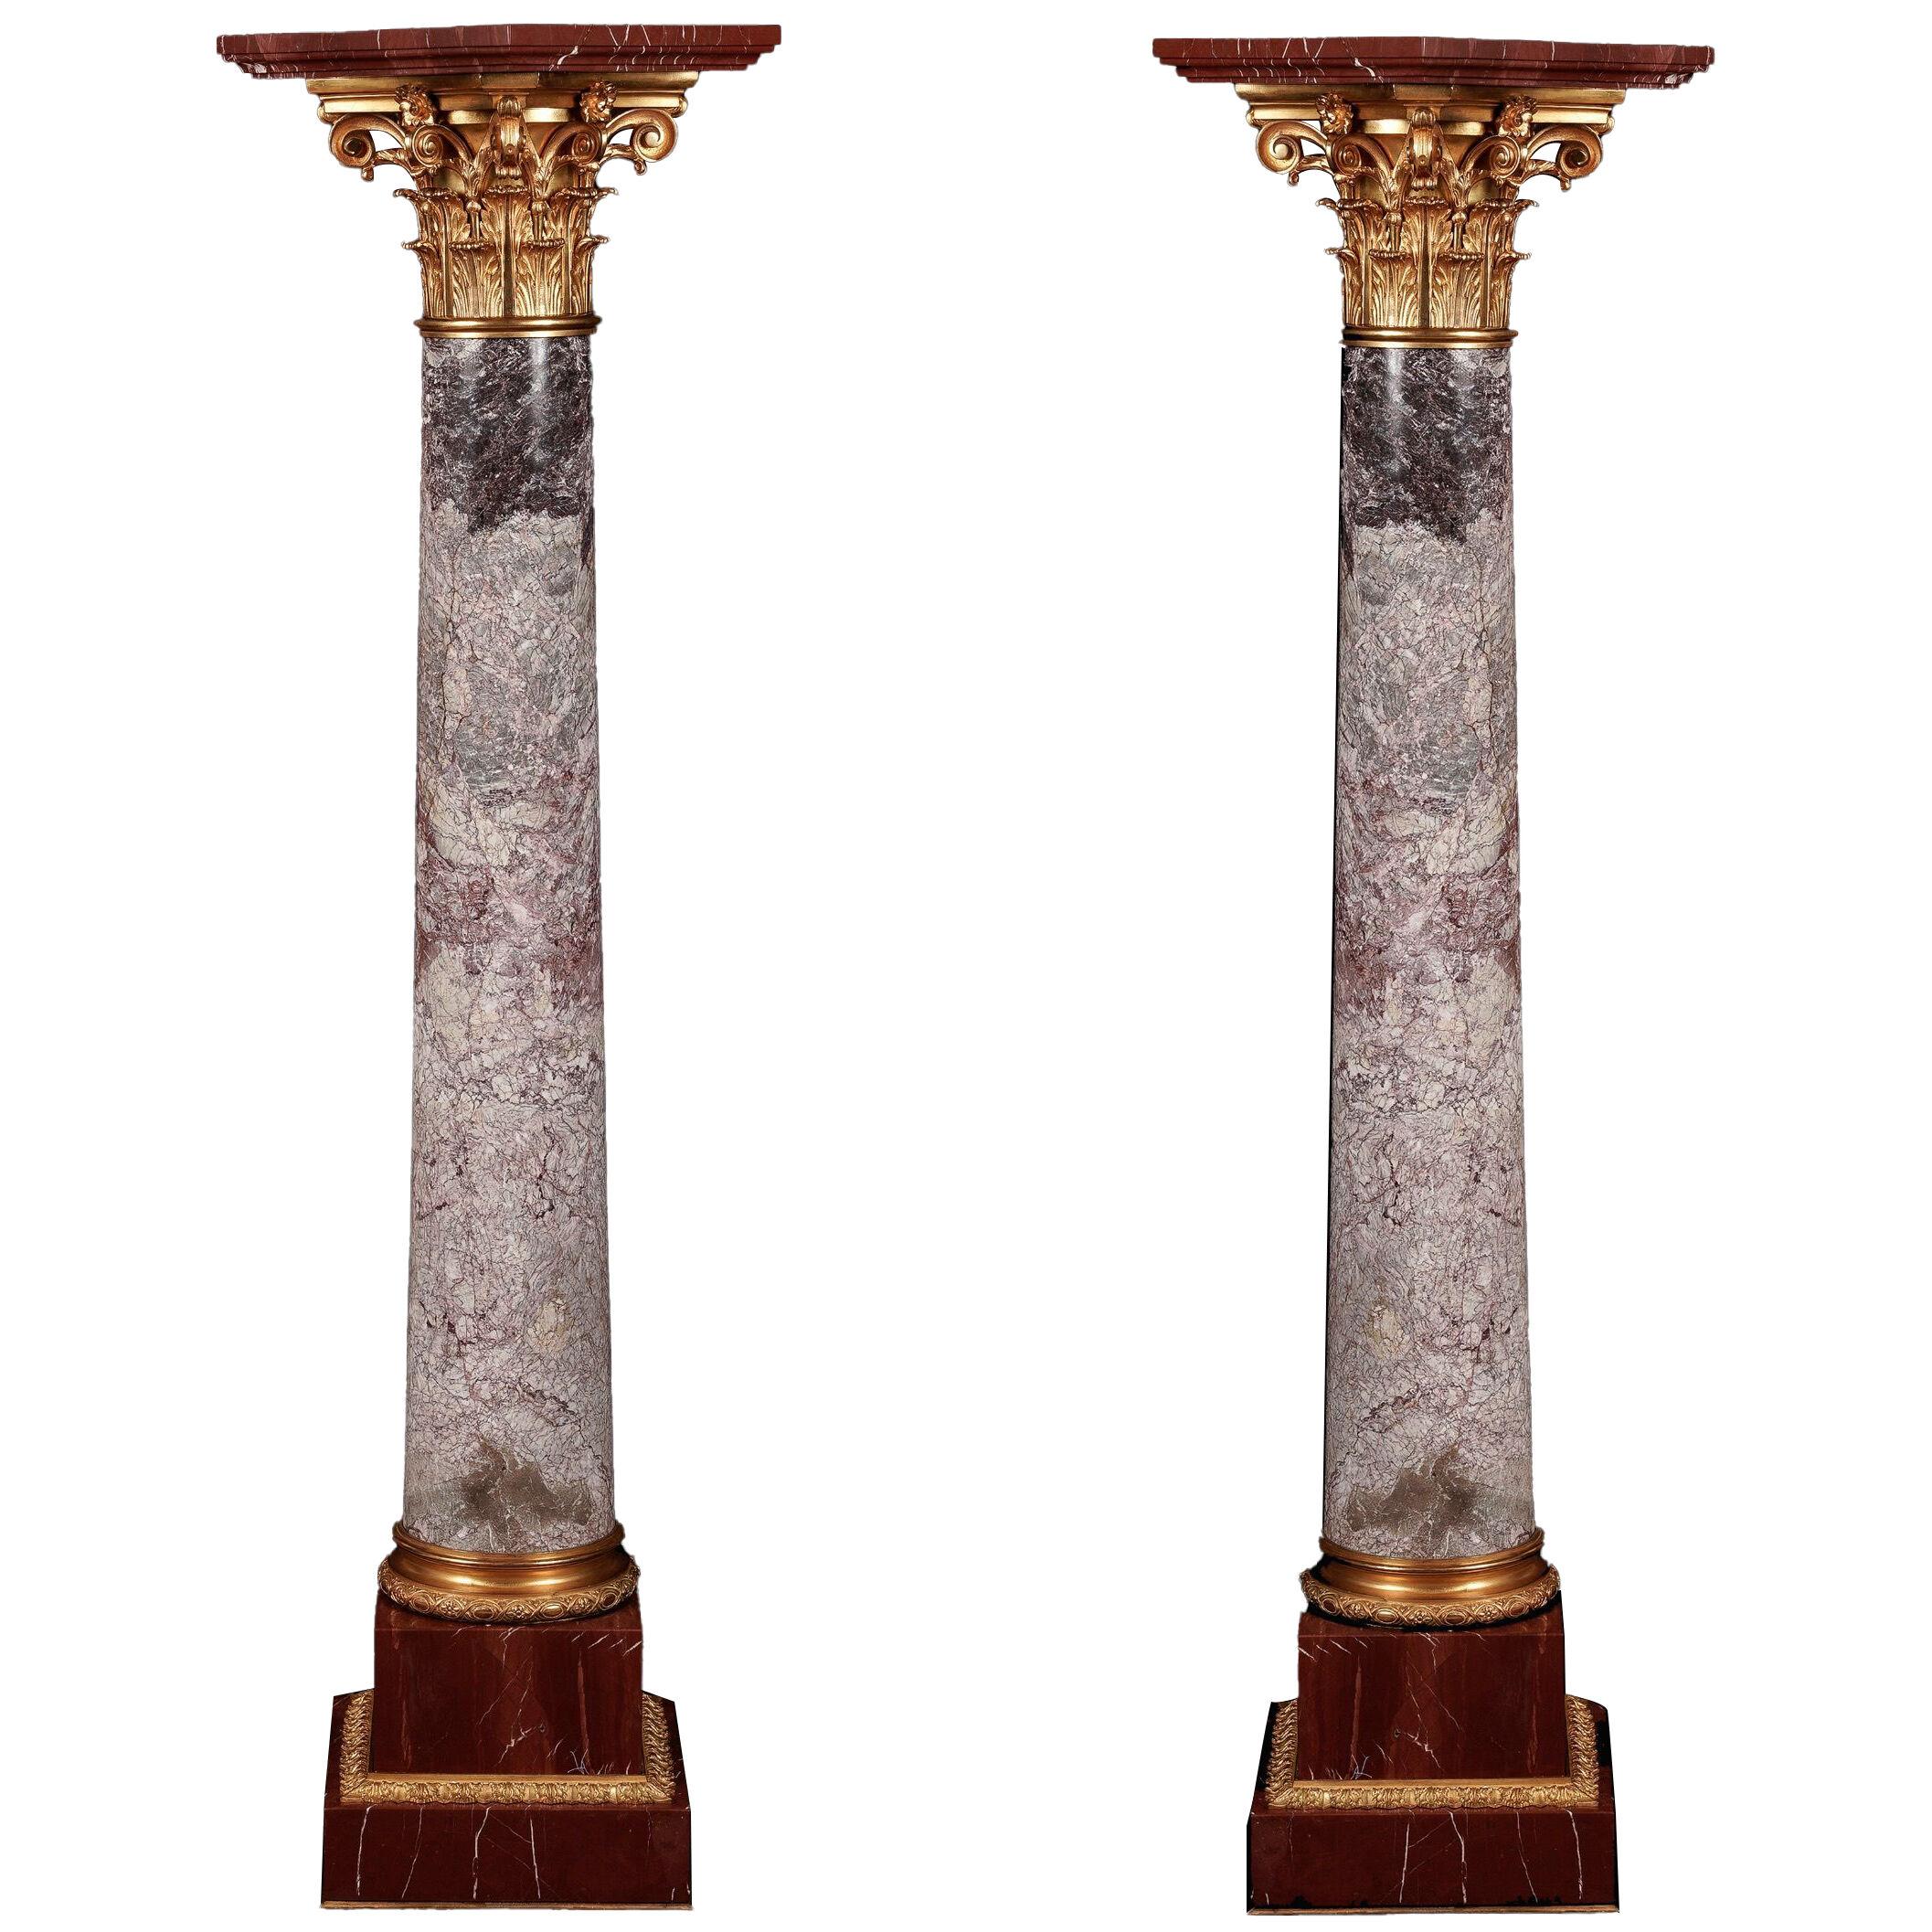  Pair of 19th Century Ormolu-Mounted Marble Pedestals